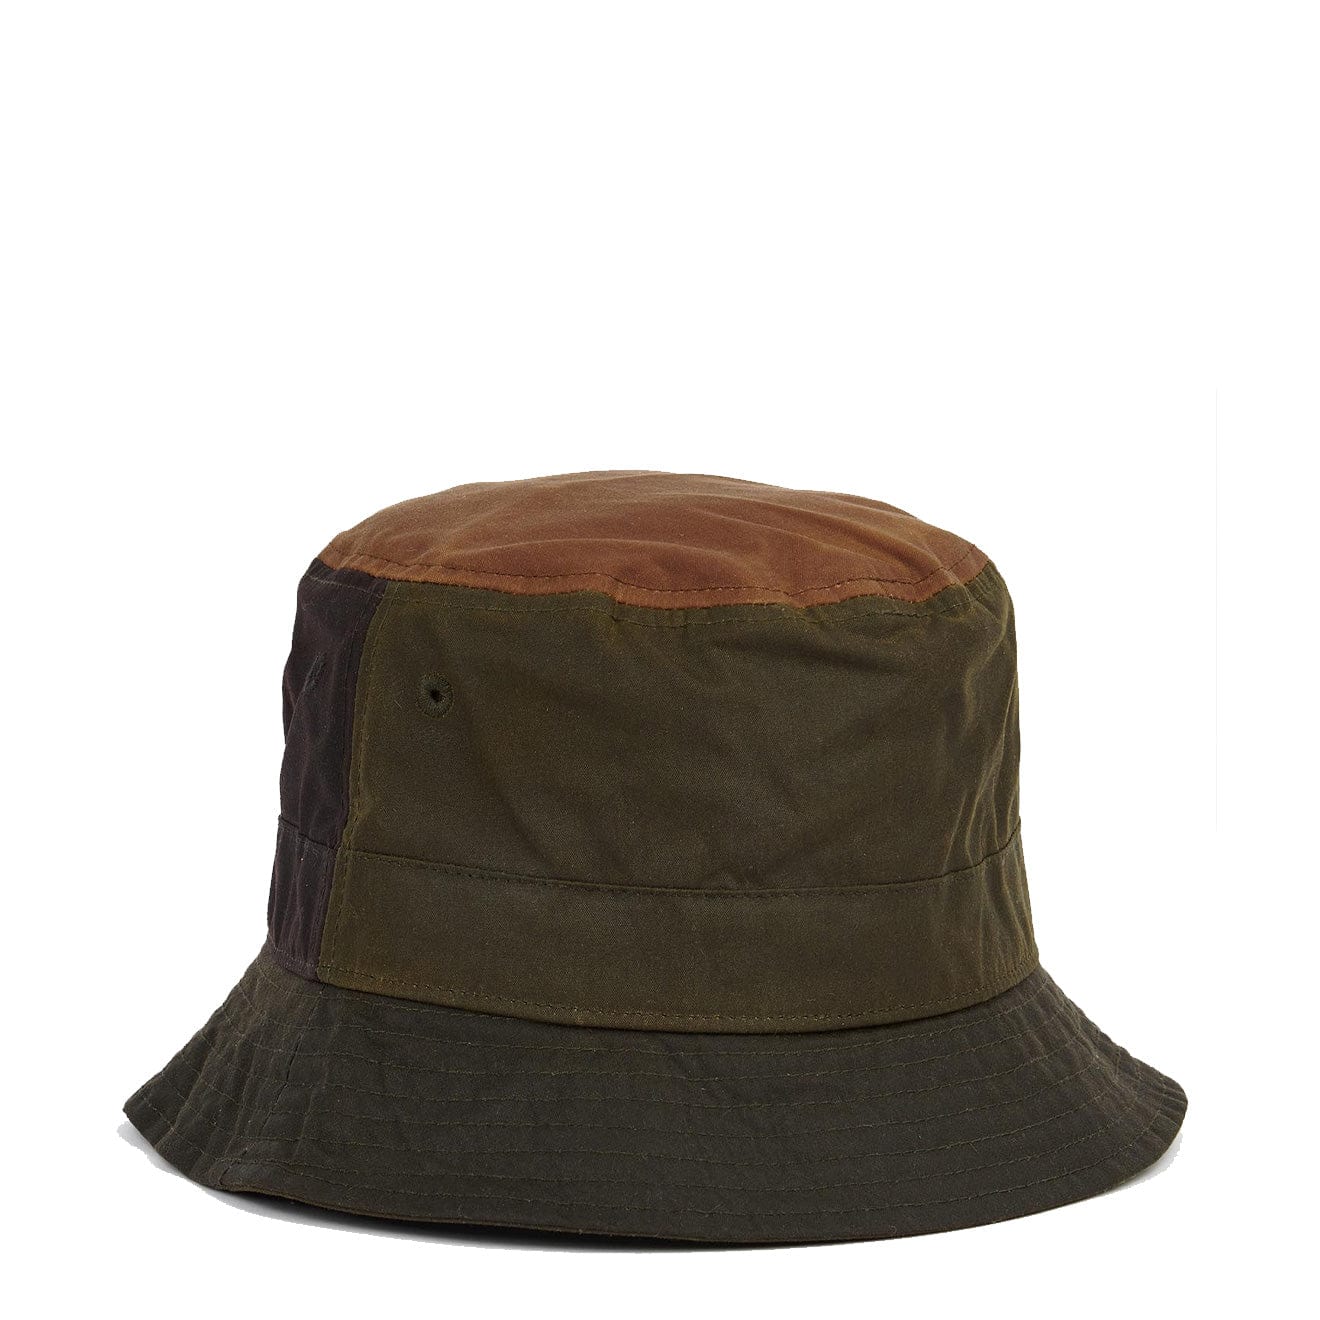 Barbour Alderton Sports Hat Olive / Rustic / Bark | The Sporting Lodge